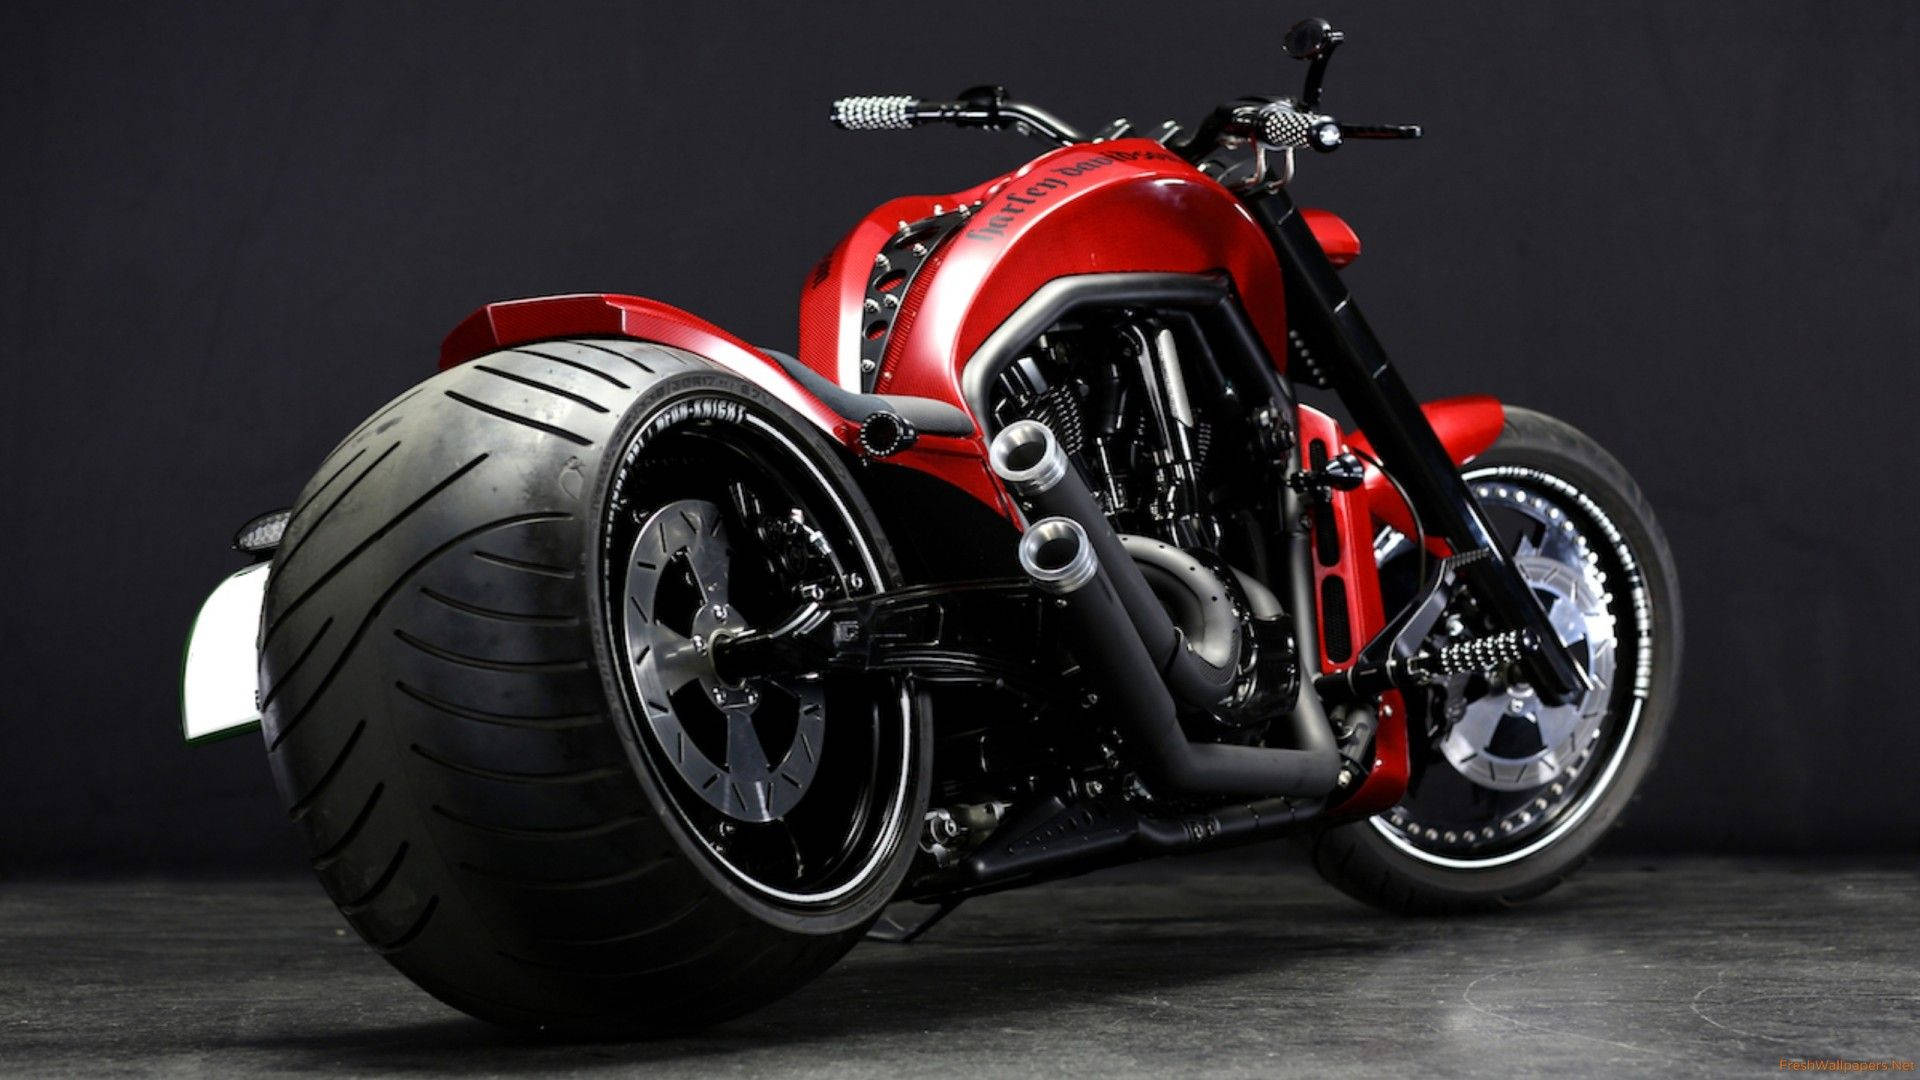 Red Harley Davidson V-rod